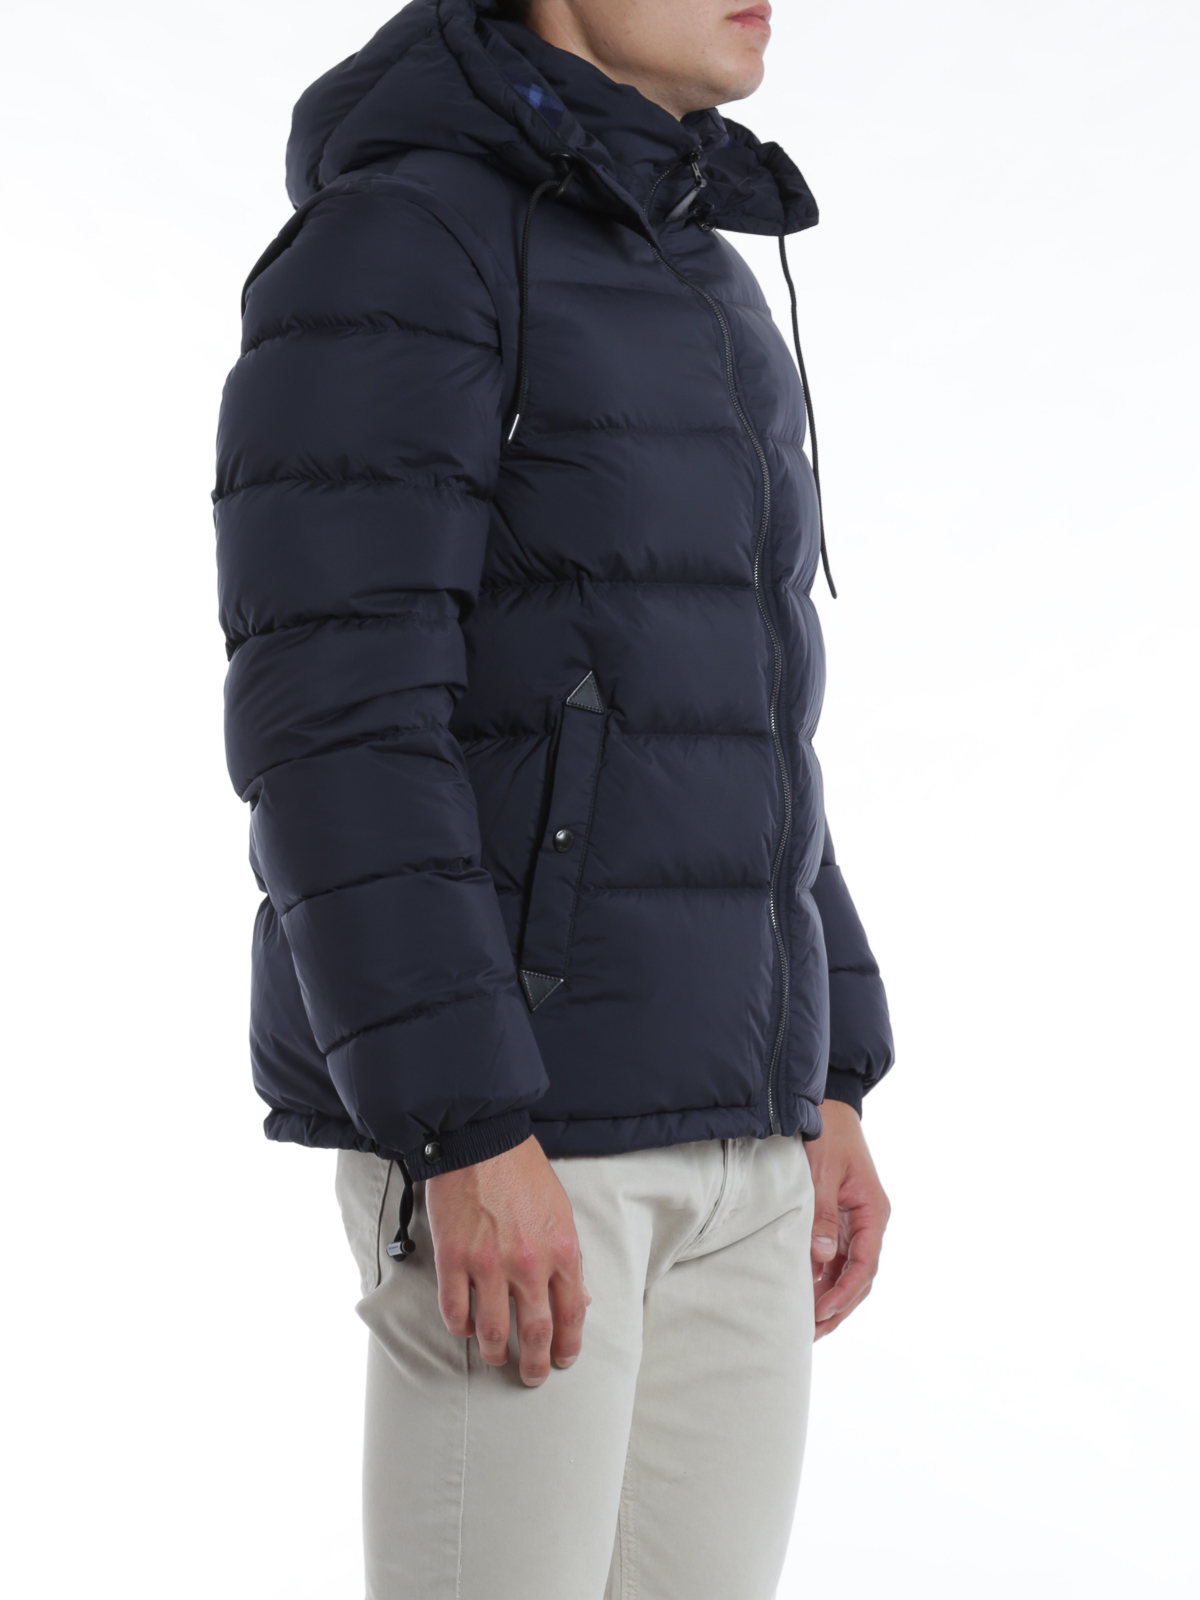 Burberry - Basford padded jacket 